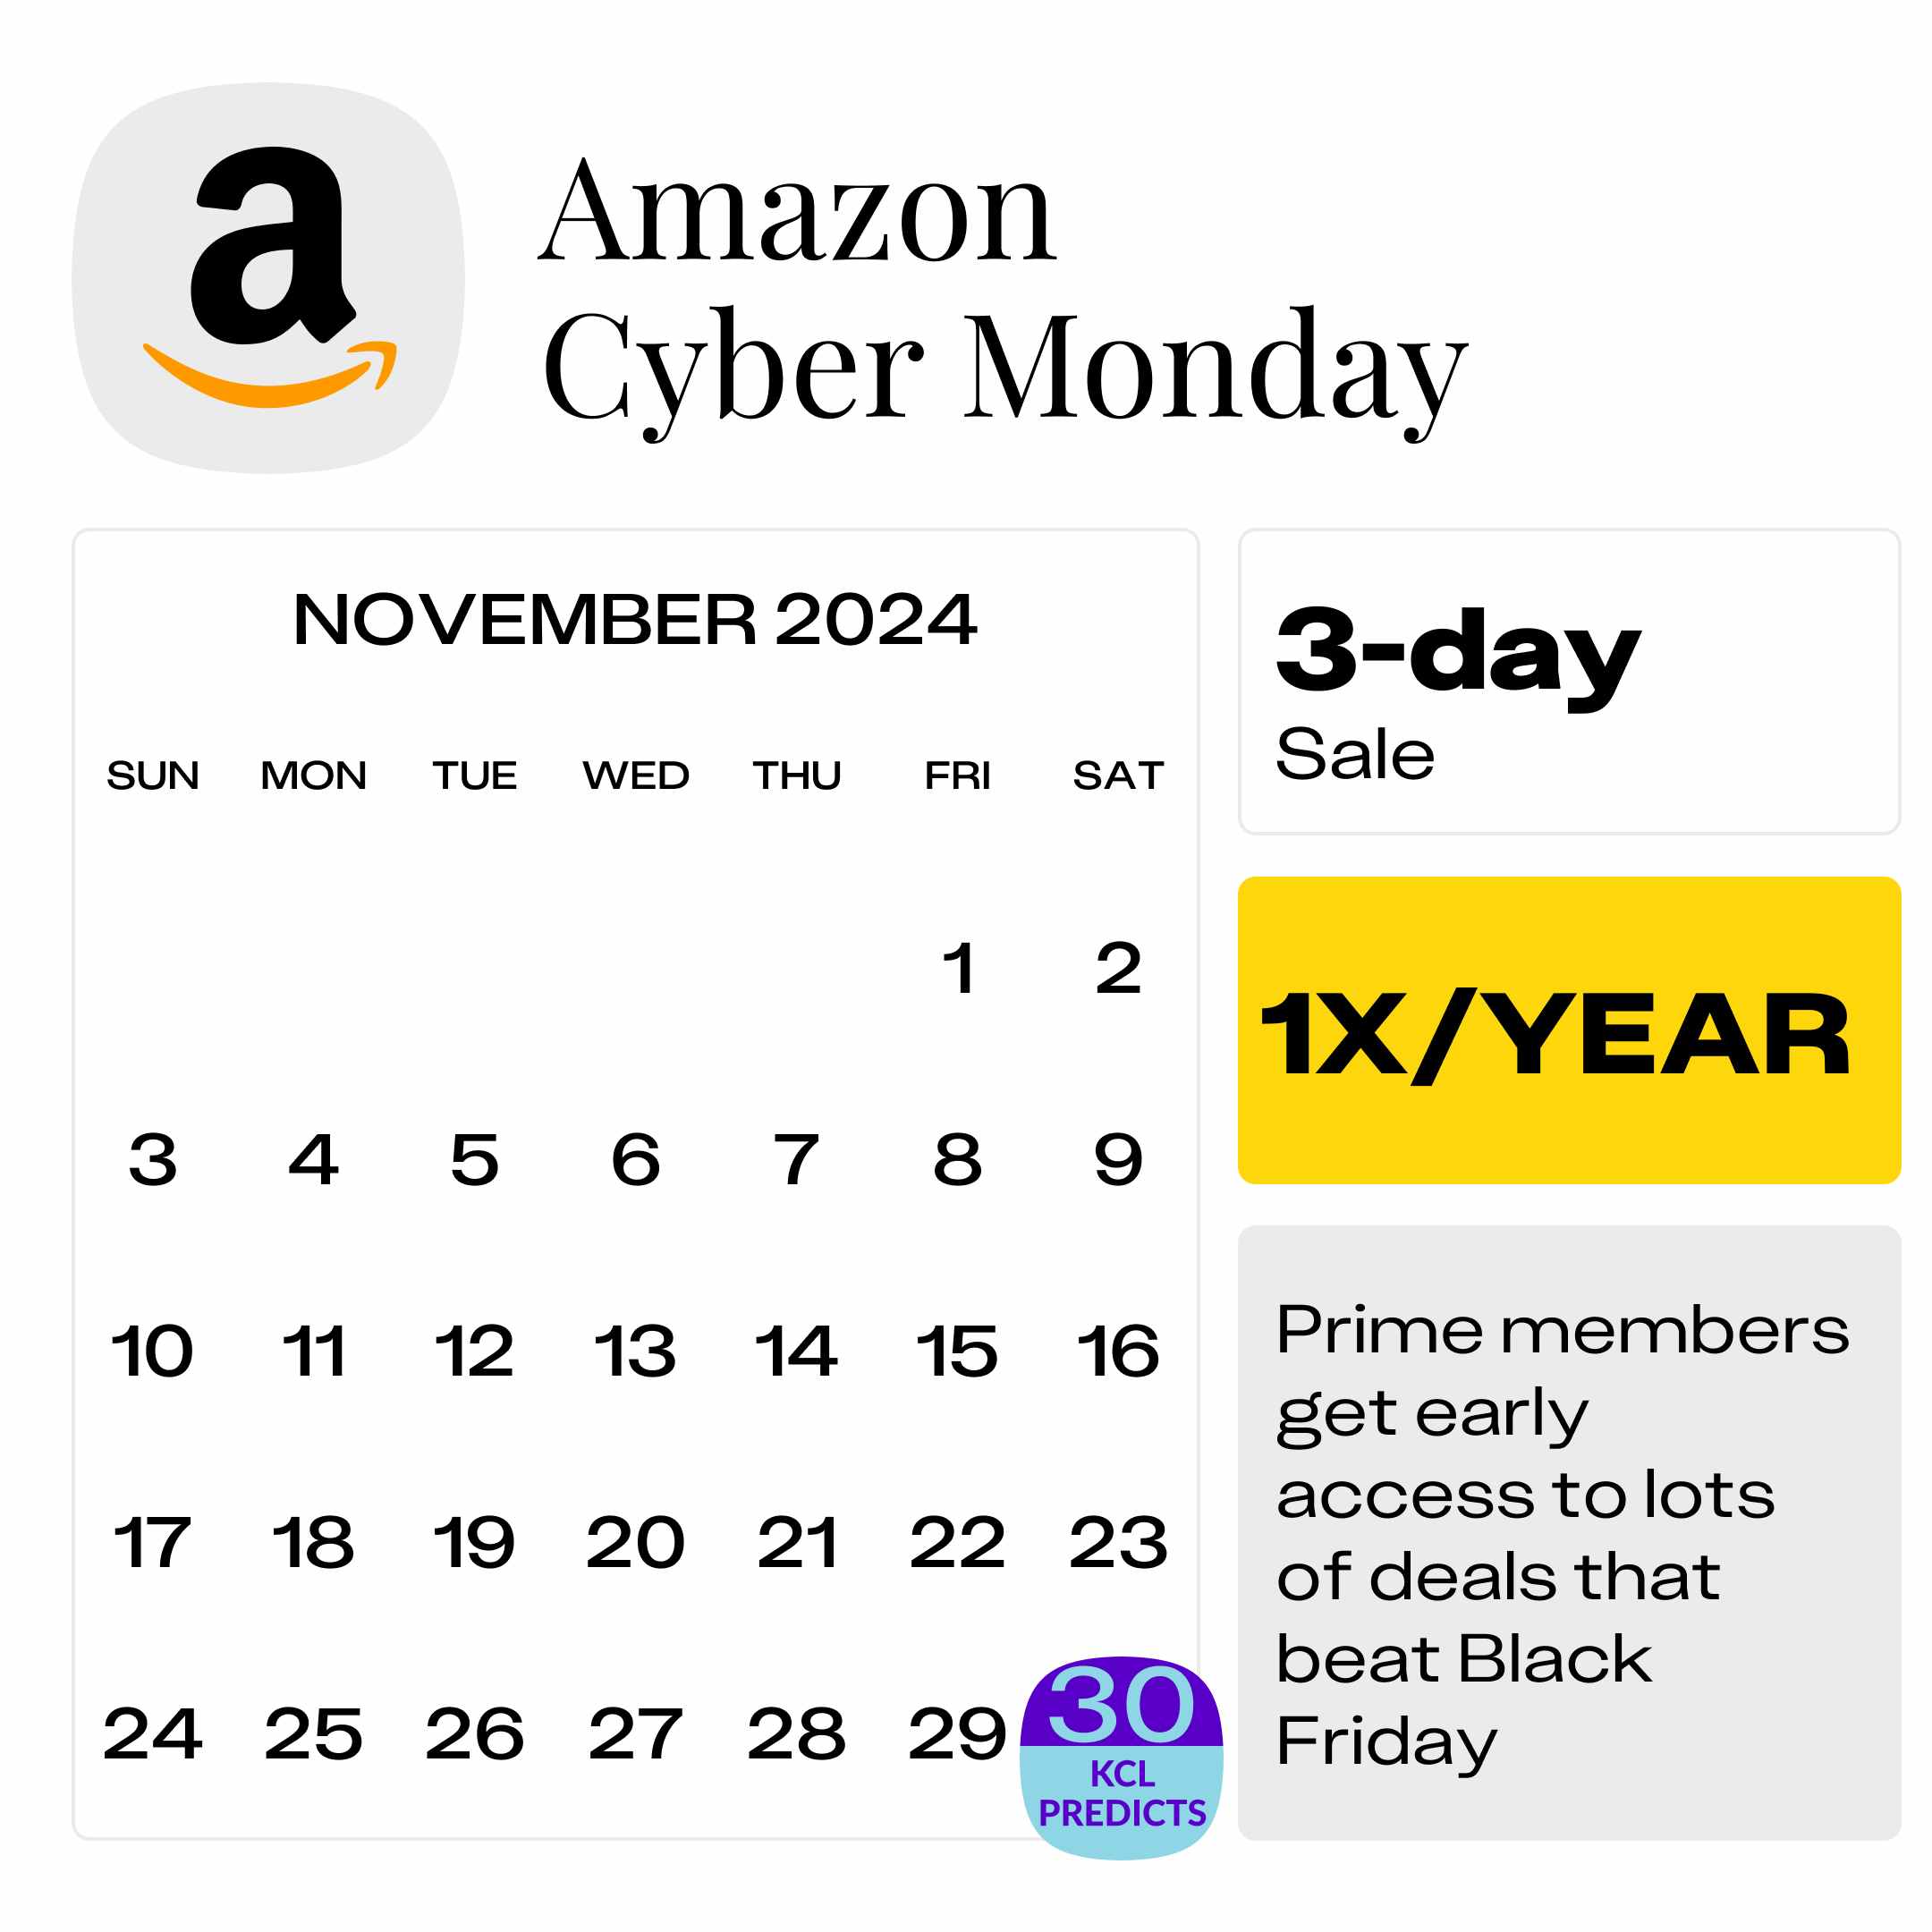 Amazon Cyber Monday 